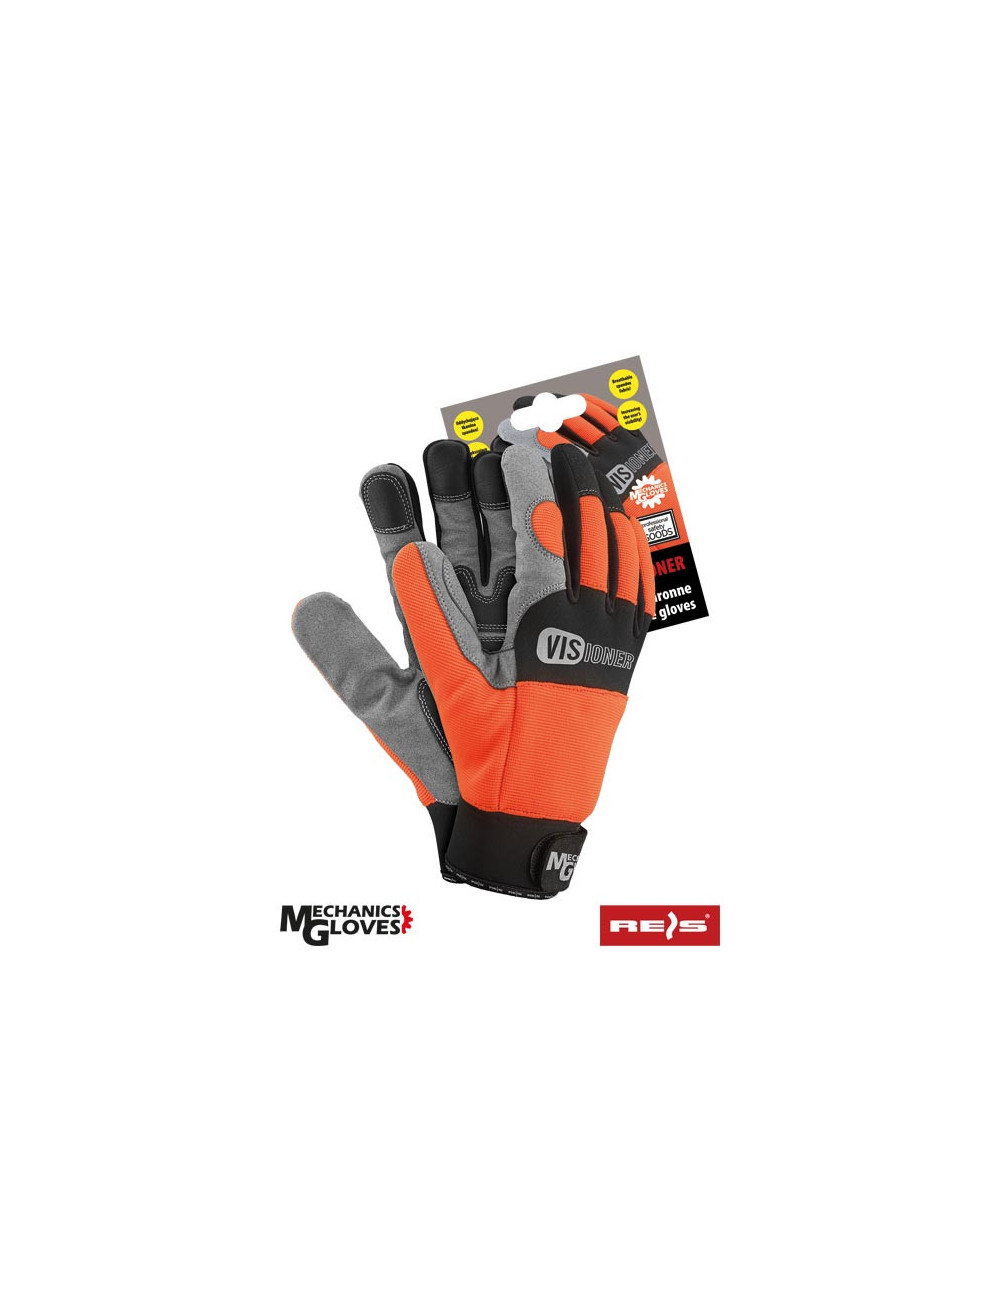 Protective gloves rmc-visioner pbs orange-black-gray Reis